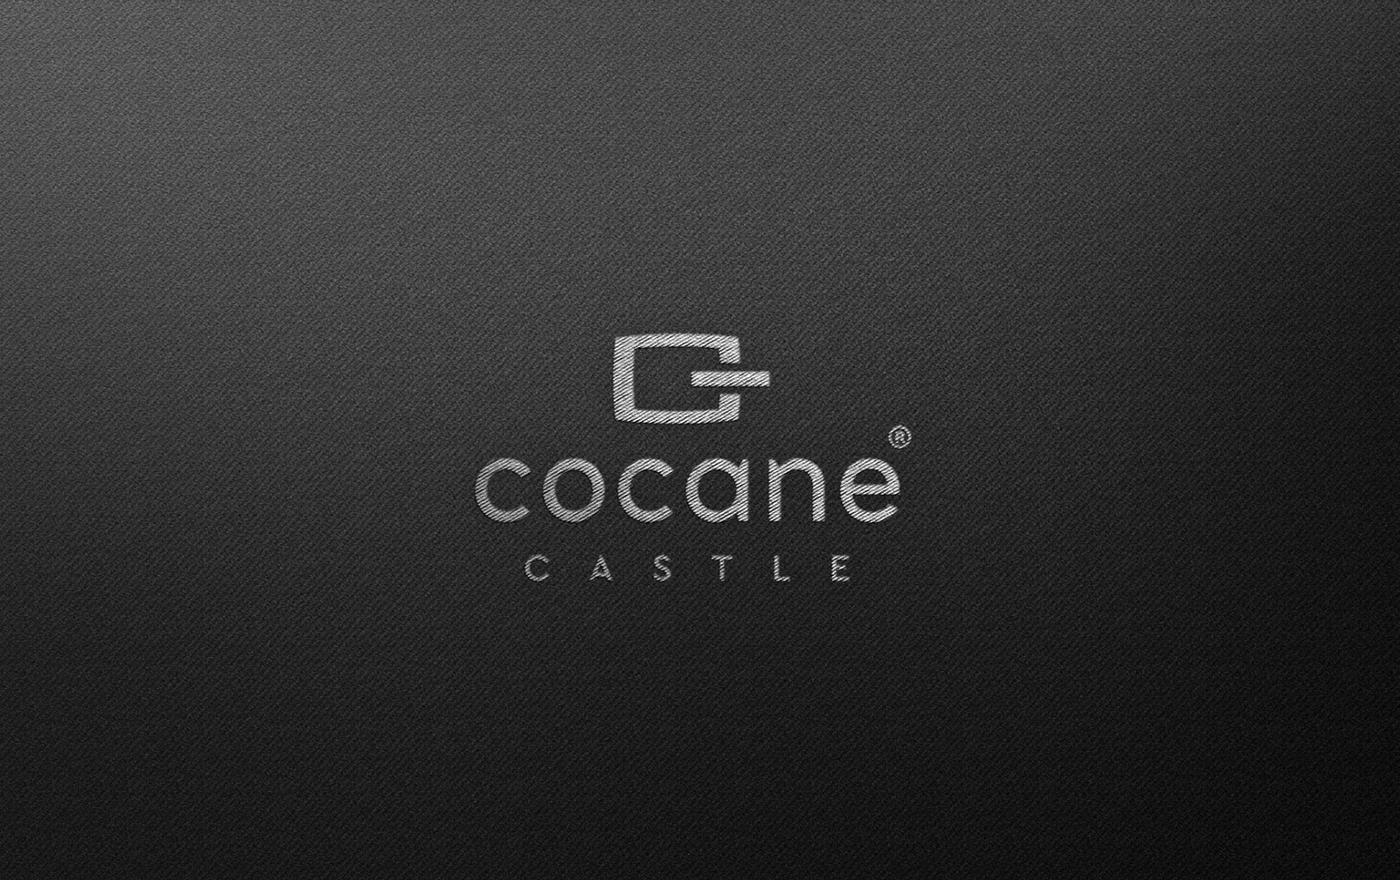 cocane castle Castle Cocane logo simpleandlogical Creativity clothing brand Clothing brand London